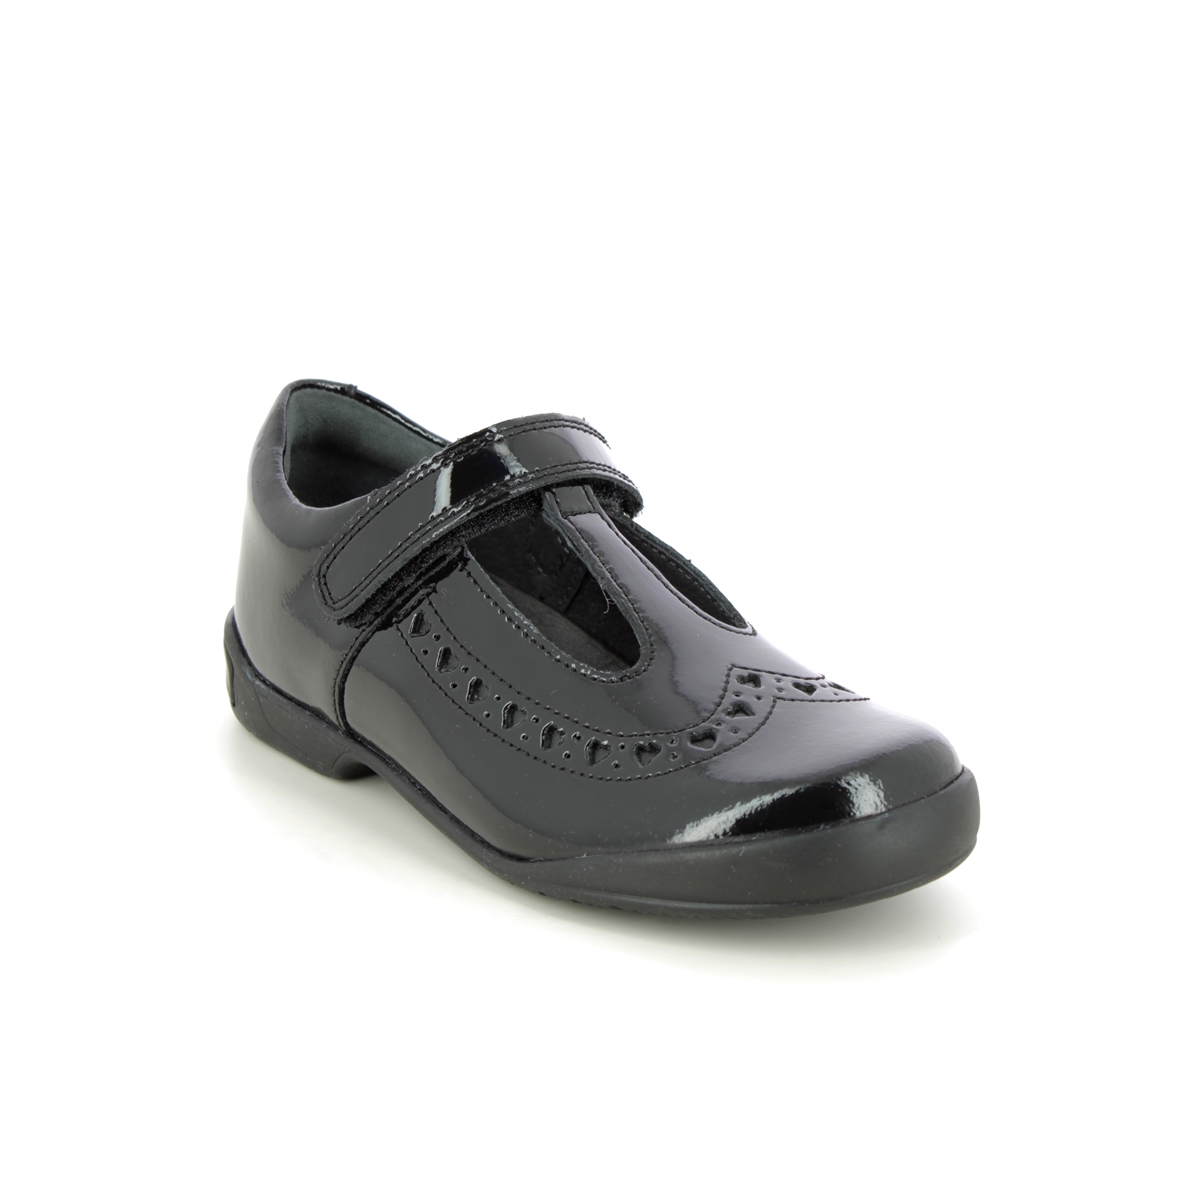 Start Rite - Leapfrog In Black Patent 2789-36F In Size 13 In Plain Black Patent For School Girls Shoes  In Black Patent For kids